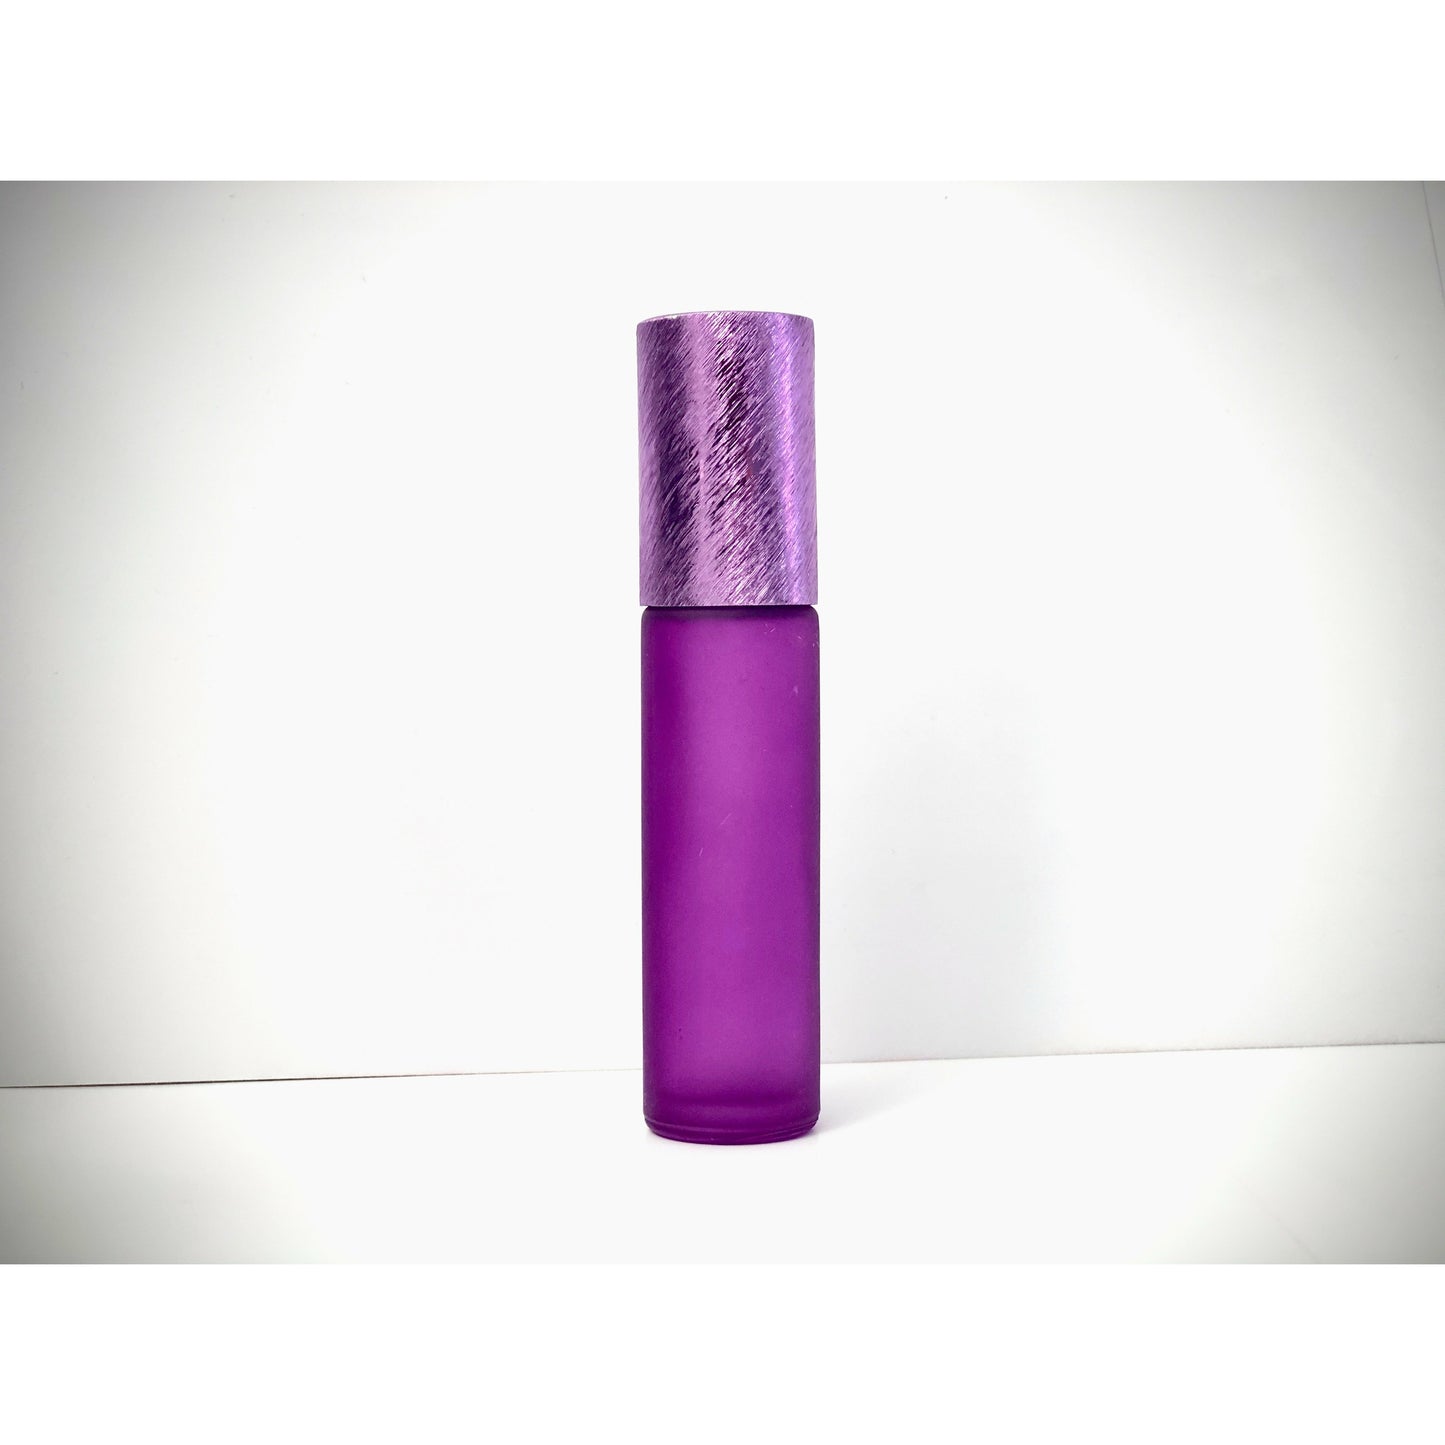 10ml Buntglas Roll-On Fläschchen lila mit Verschlusskappe lila-metallic (6er Pack)